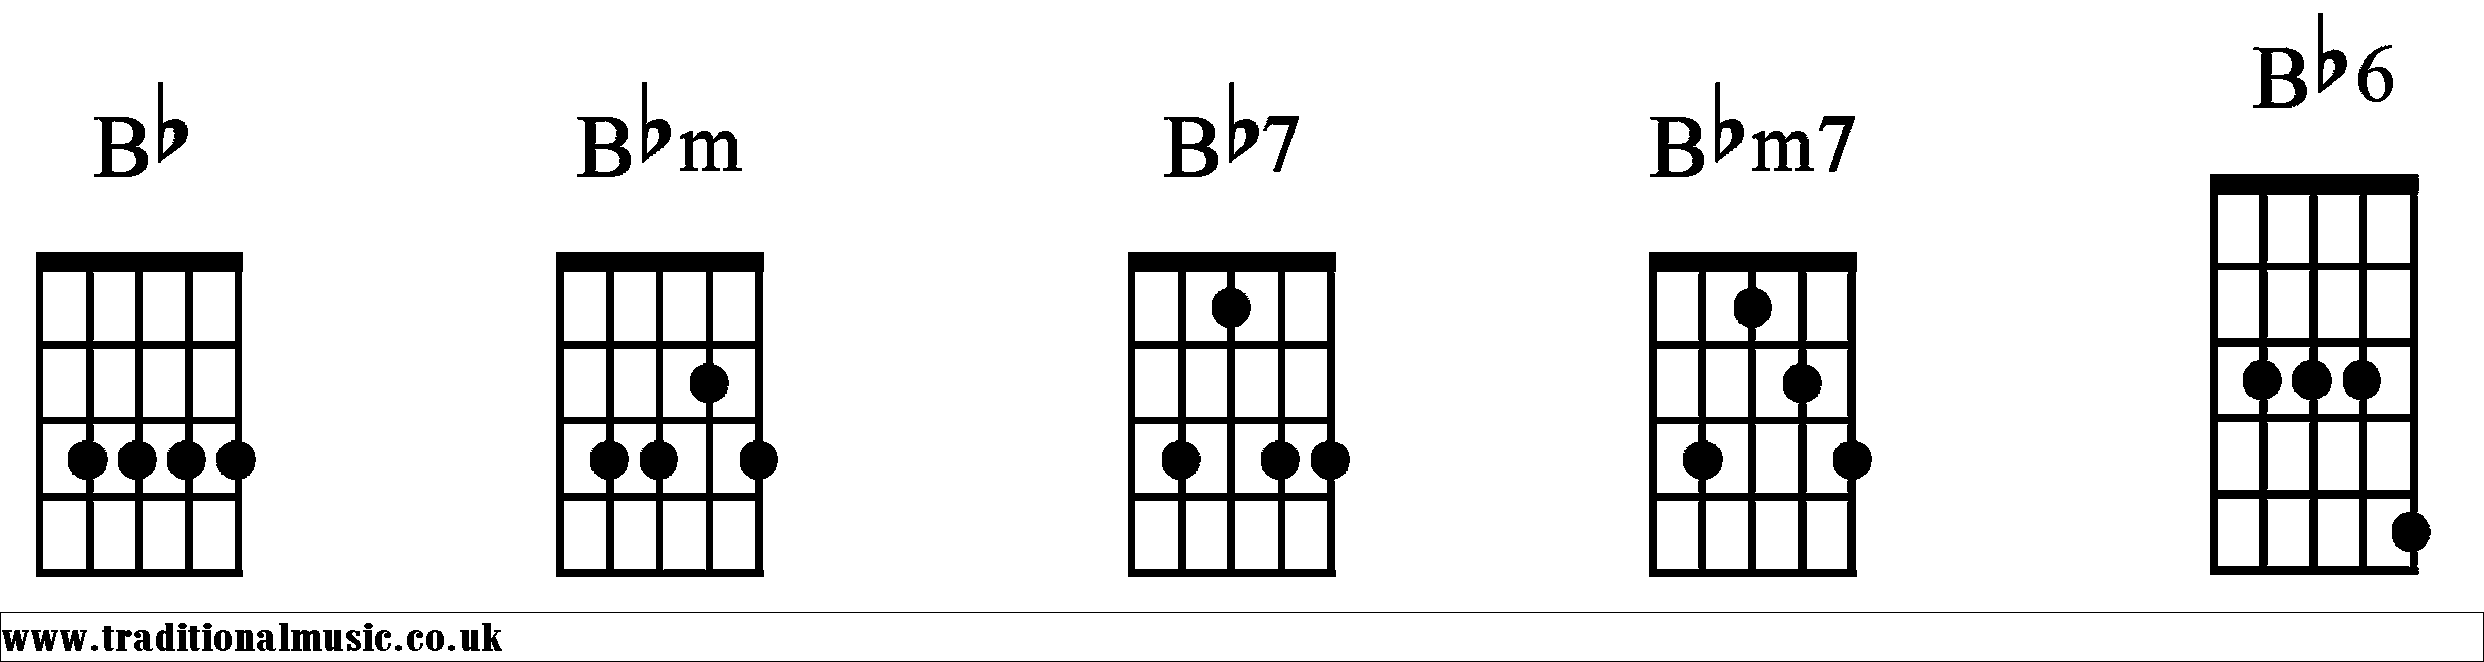 Bb Chords diagrams Banjo 1